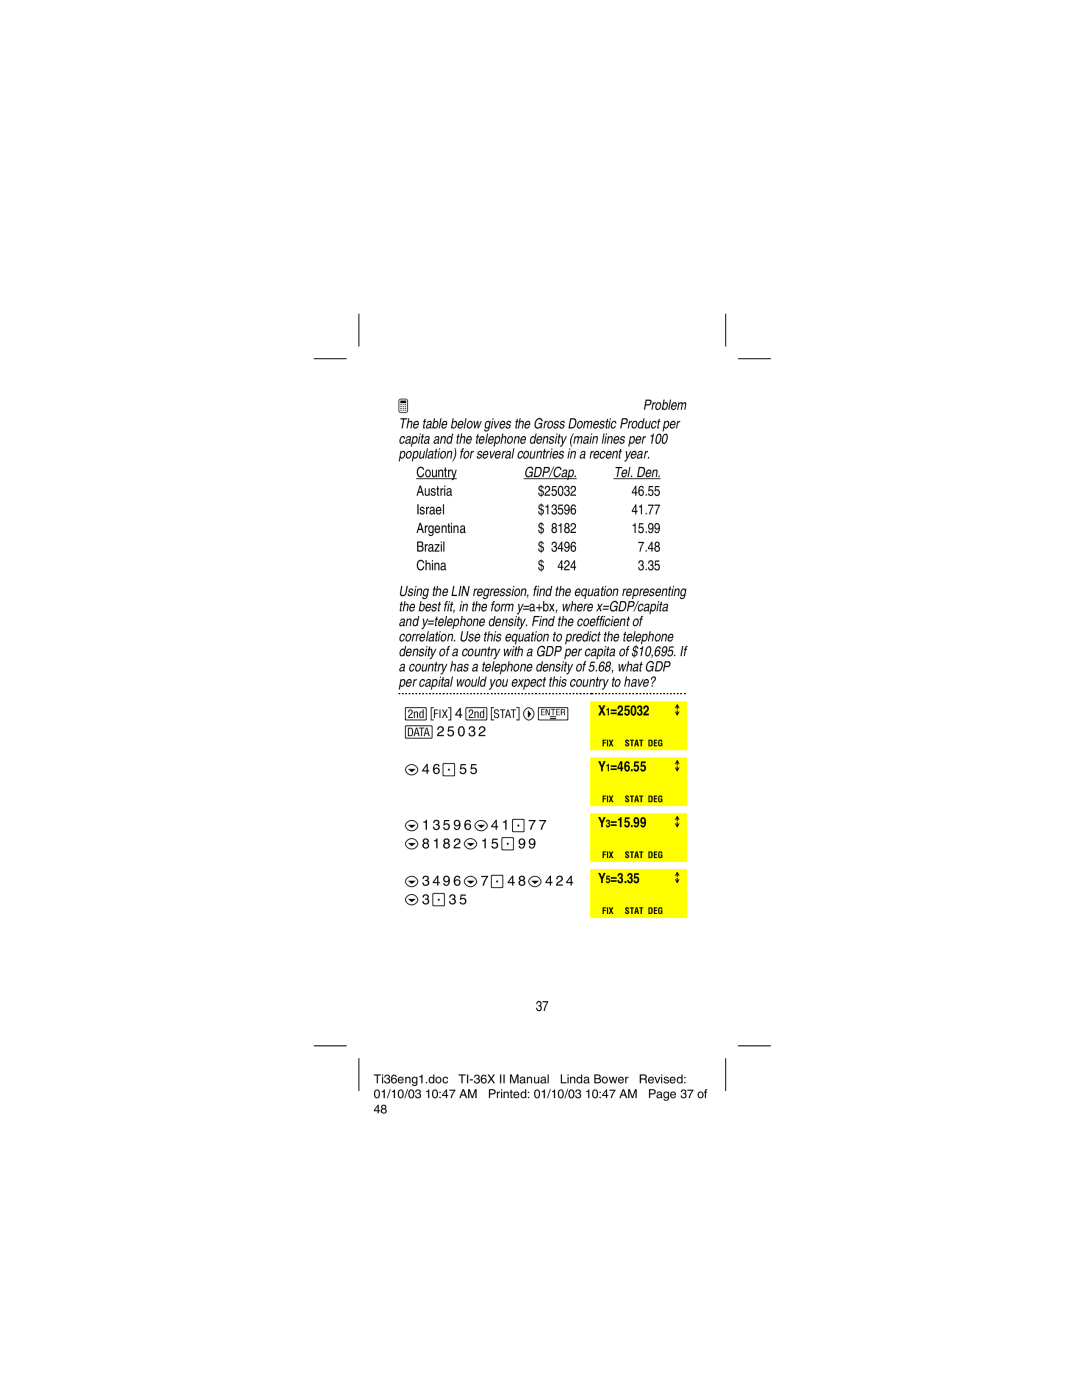 Texas Instruments TI-36X manual ³Problem, GDP/Cap, t 4 %fV 